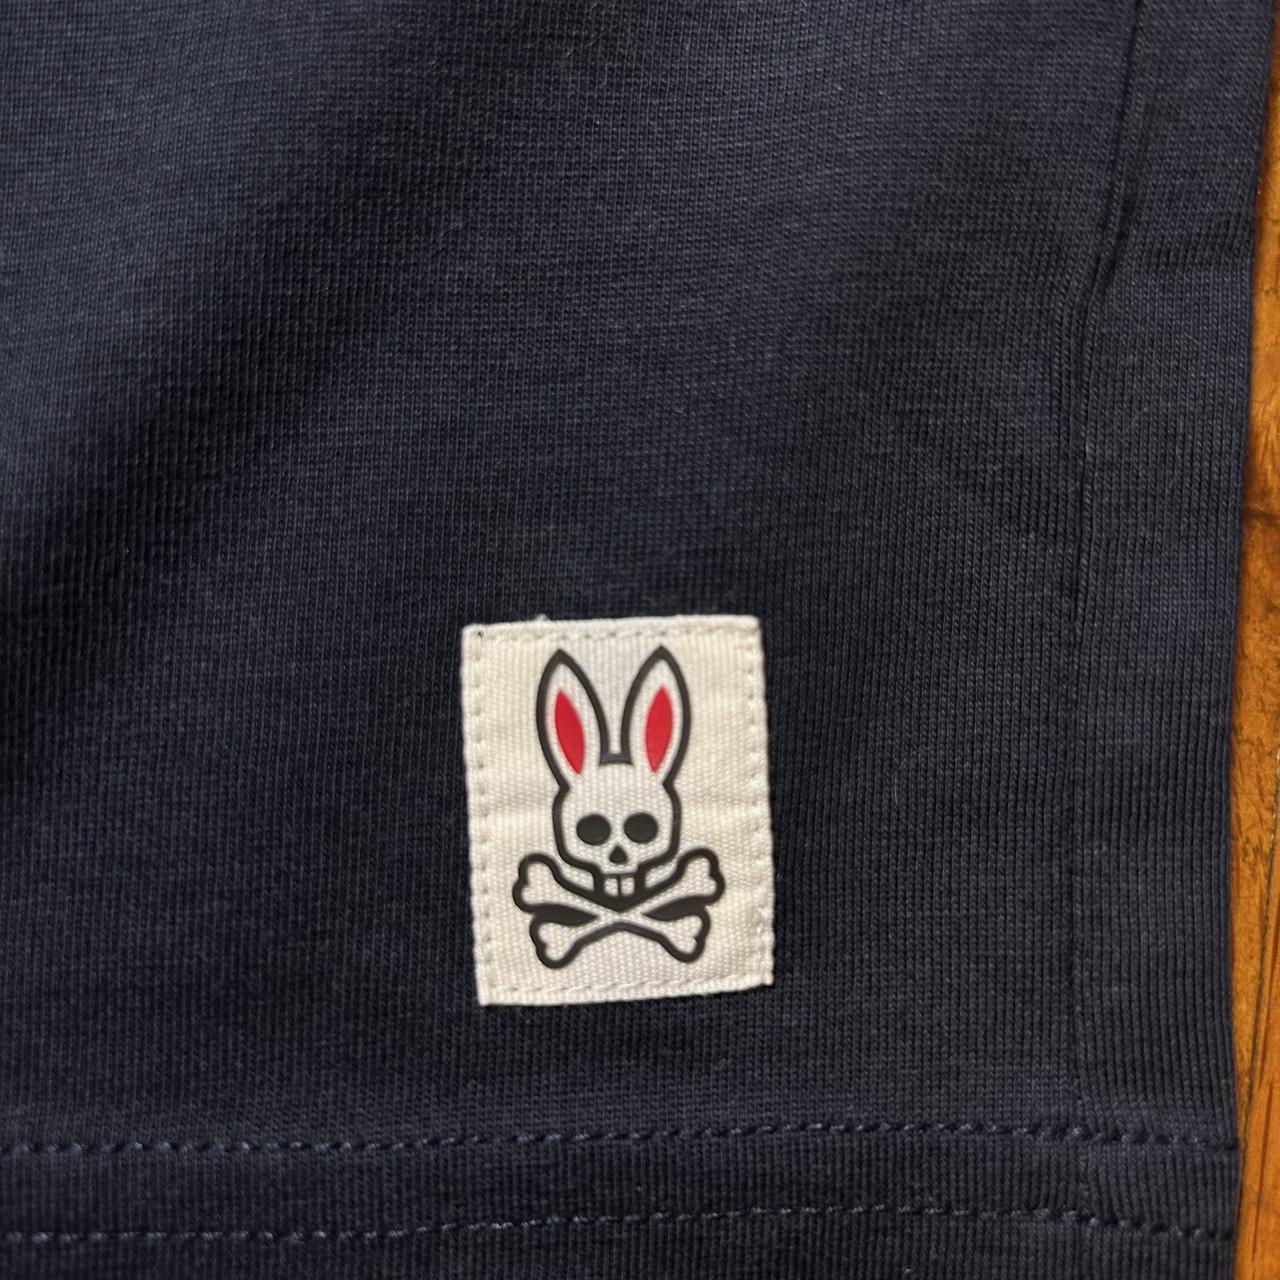 Psycho Bunny Men's Navy T-shirt (3)